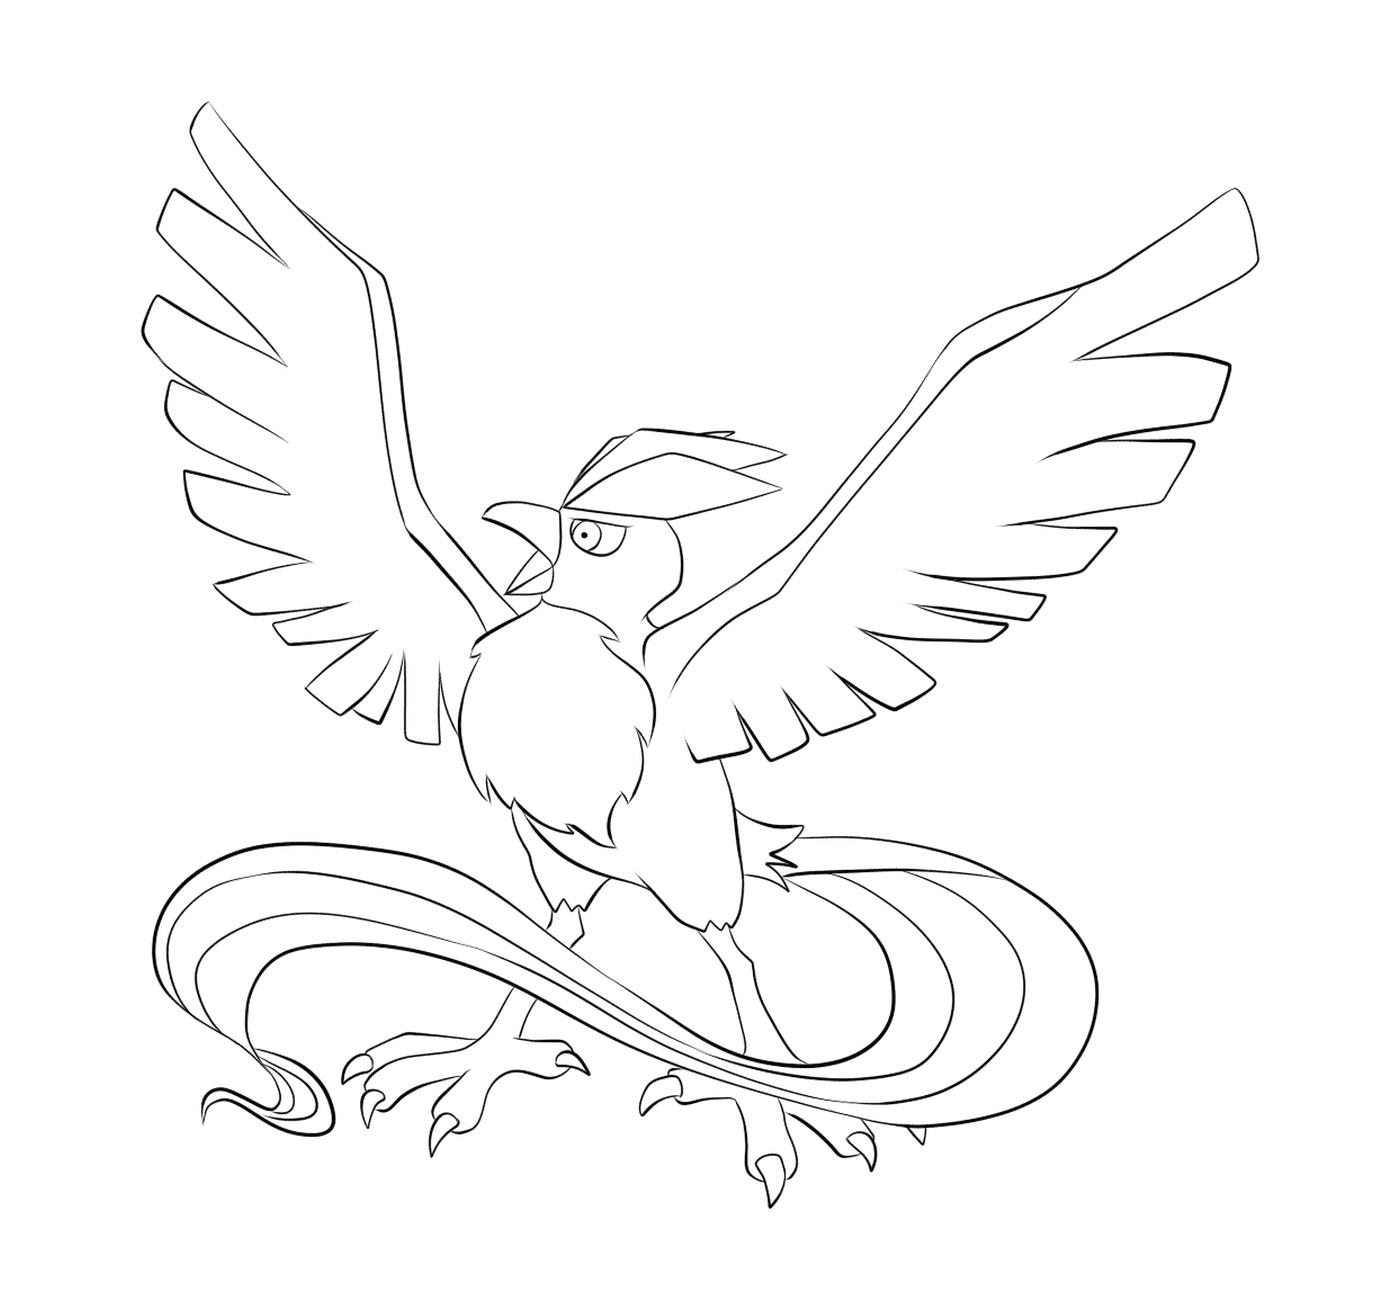  Pássaro Artikodin com asas estendidas 